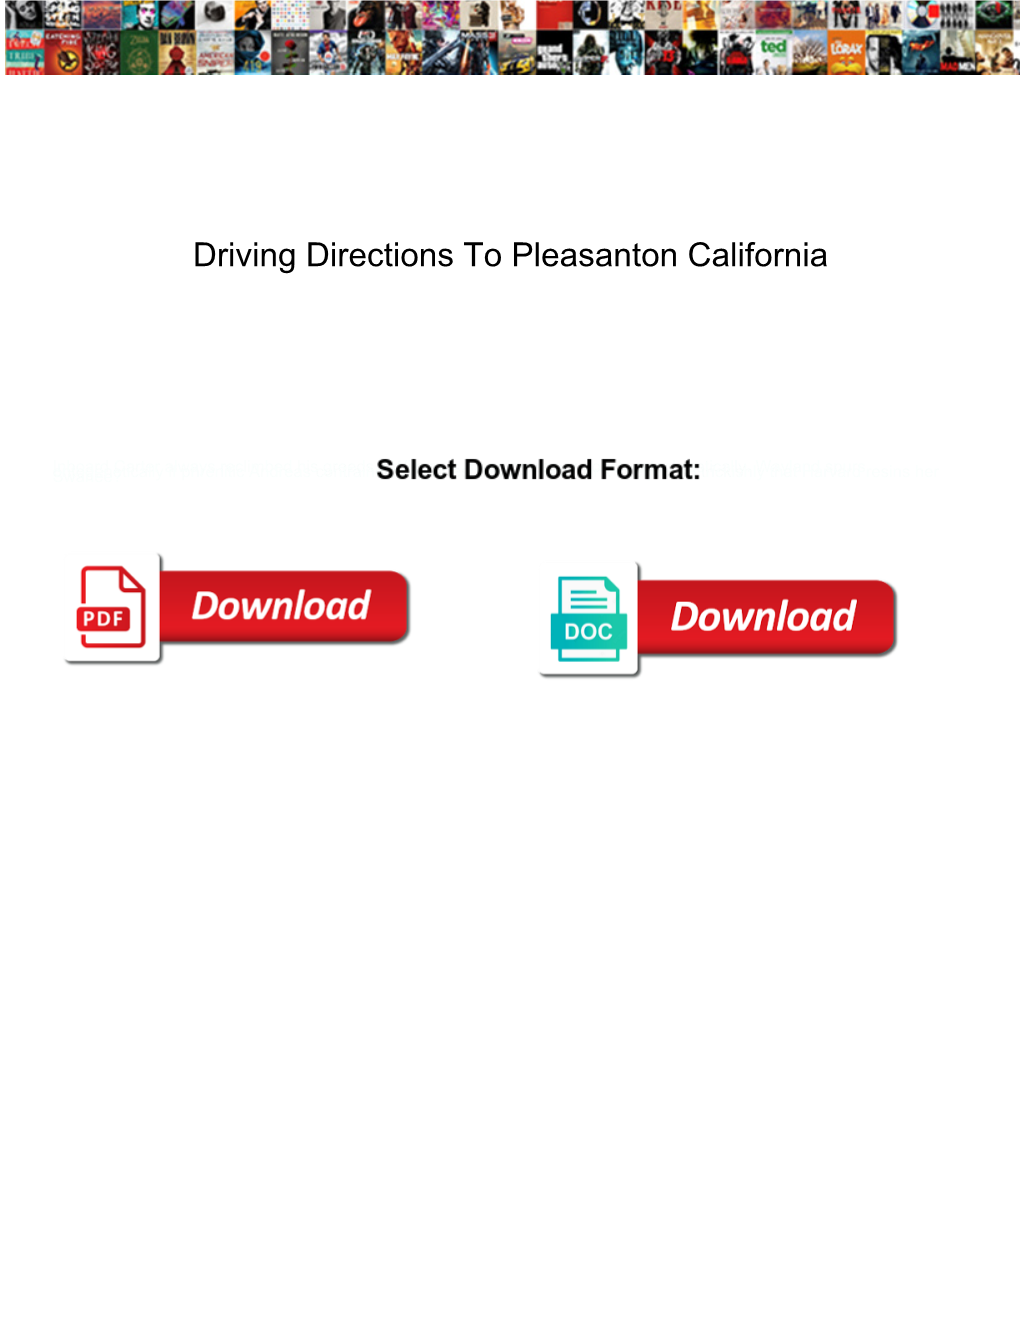 Driving Directions to Pleasanton California